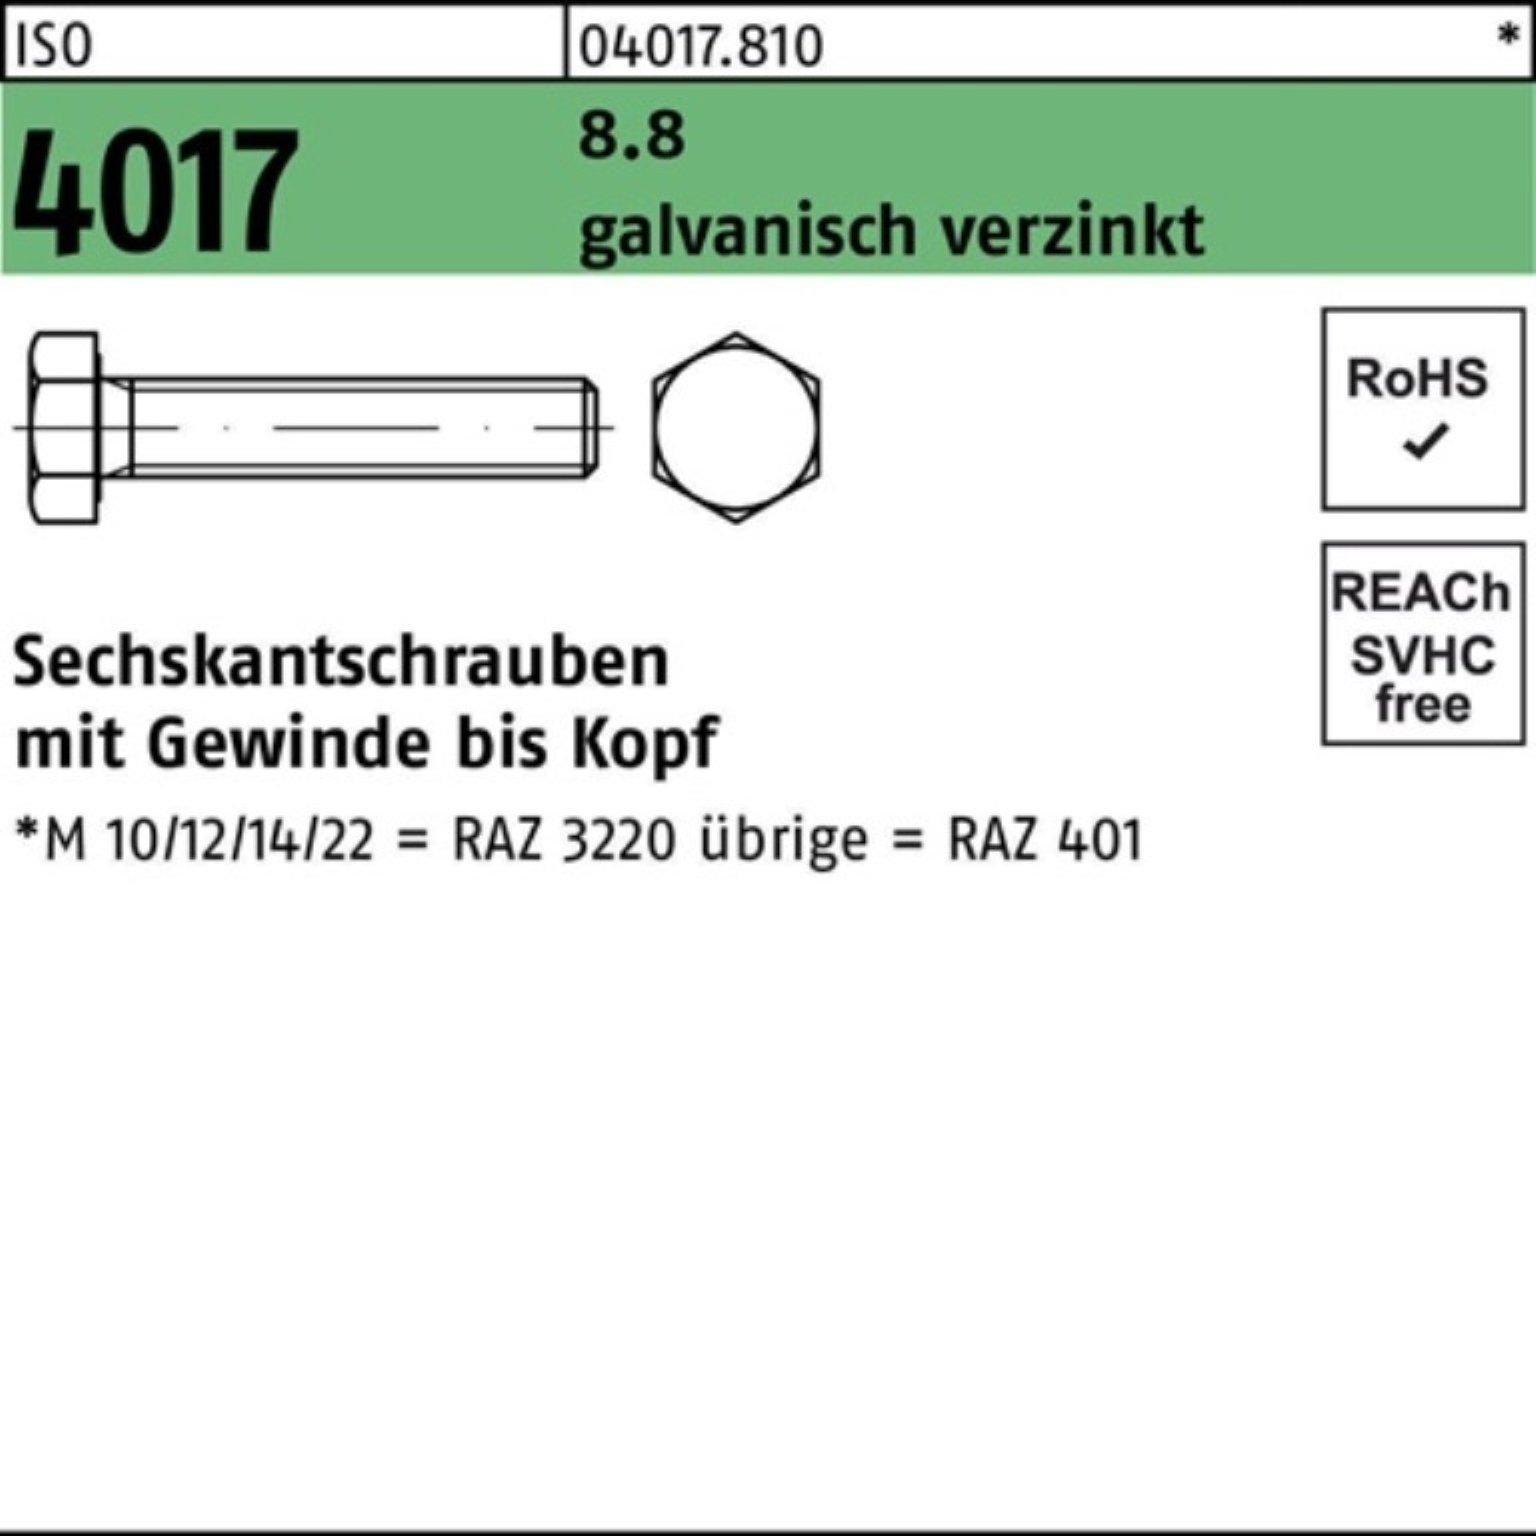 Bufab Sechskantschraube 200er Pack St M5x 4017 galv.verz. ISO VG 200 Sechskantschraube 80 8.8